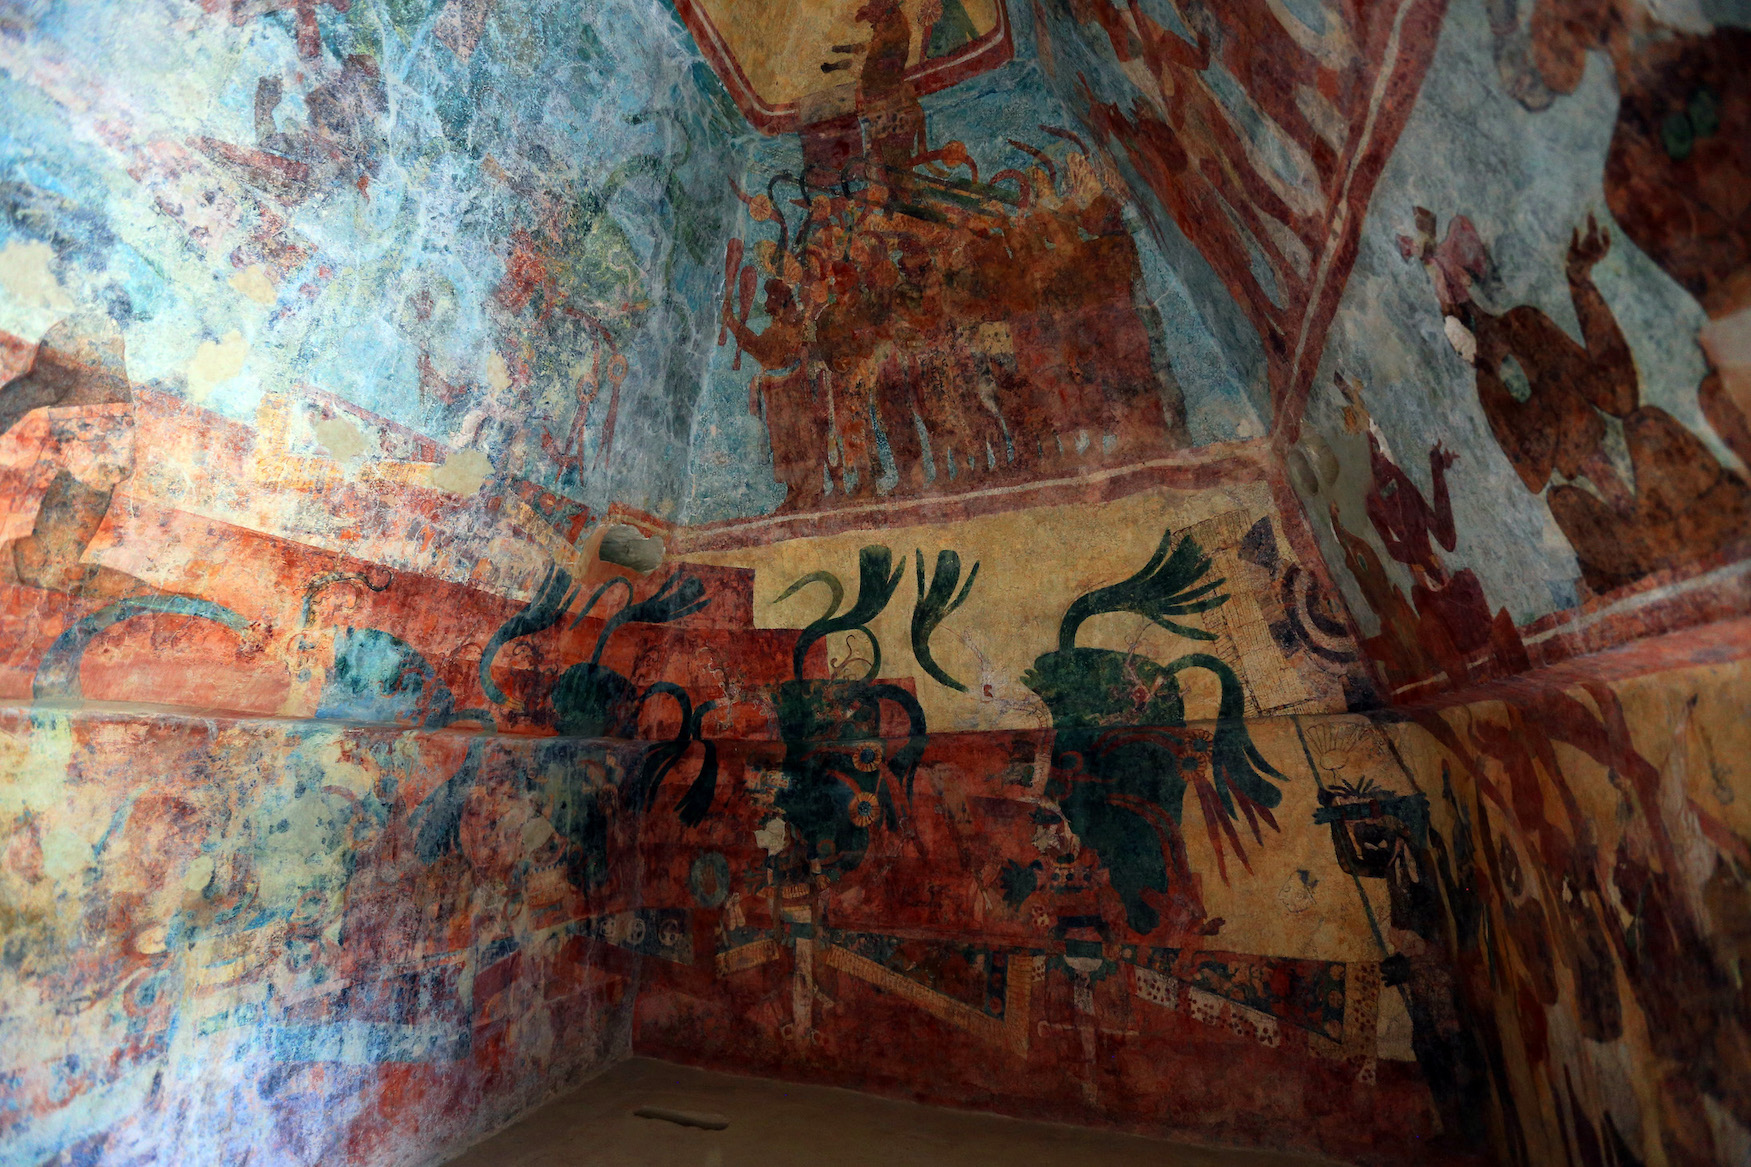 Murals, c. 792 C.E., room 3, building 1, Bonampak, Chiapas, Mexico